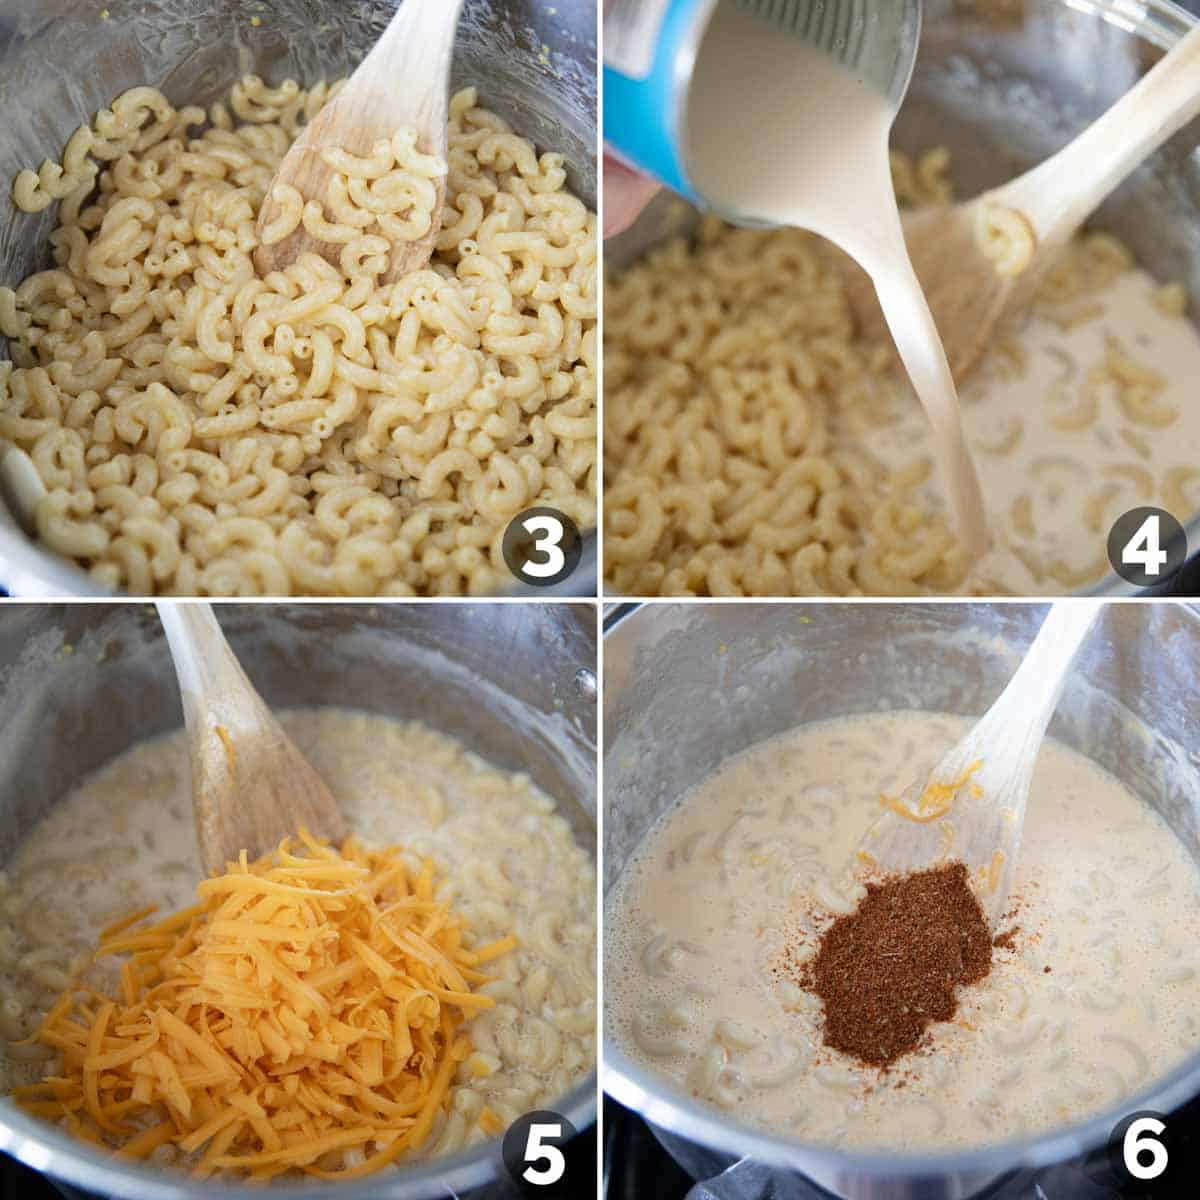 Steps to make Taco Mac and Cheese, adding liquid, cheese, and taco seasoning.